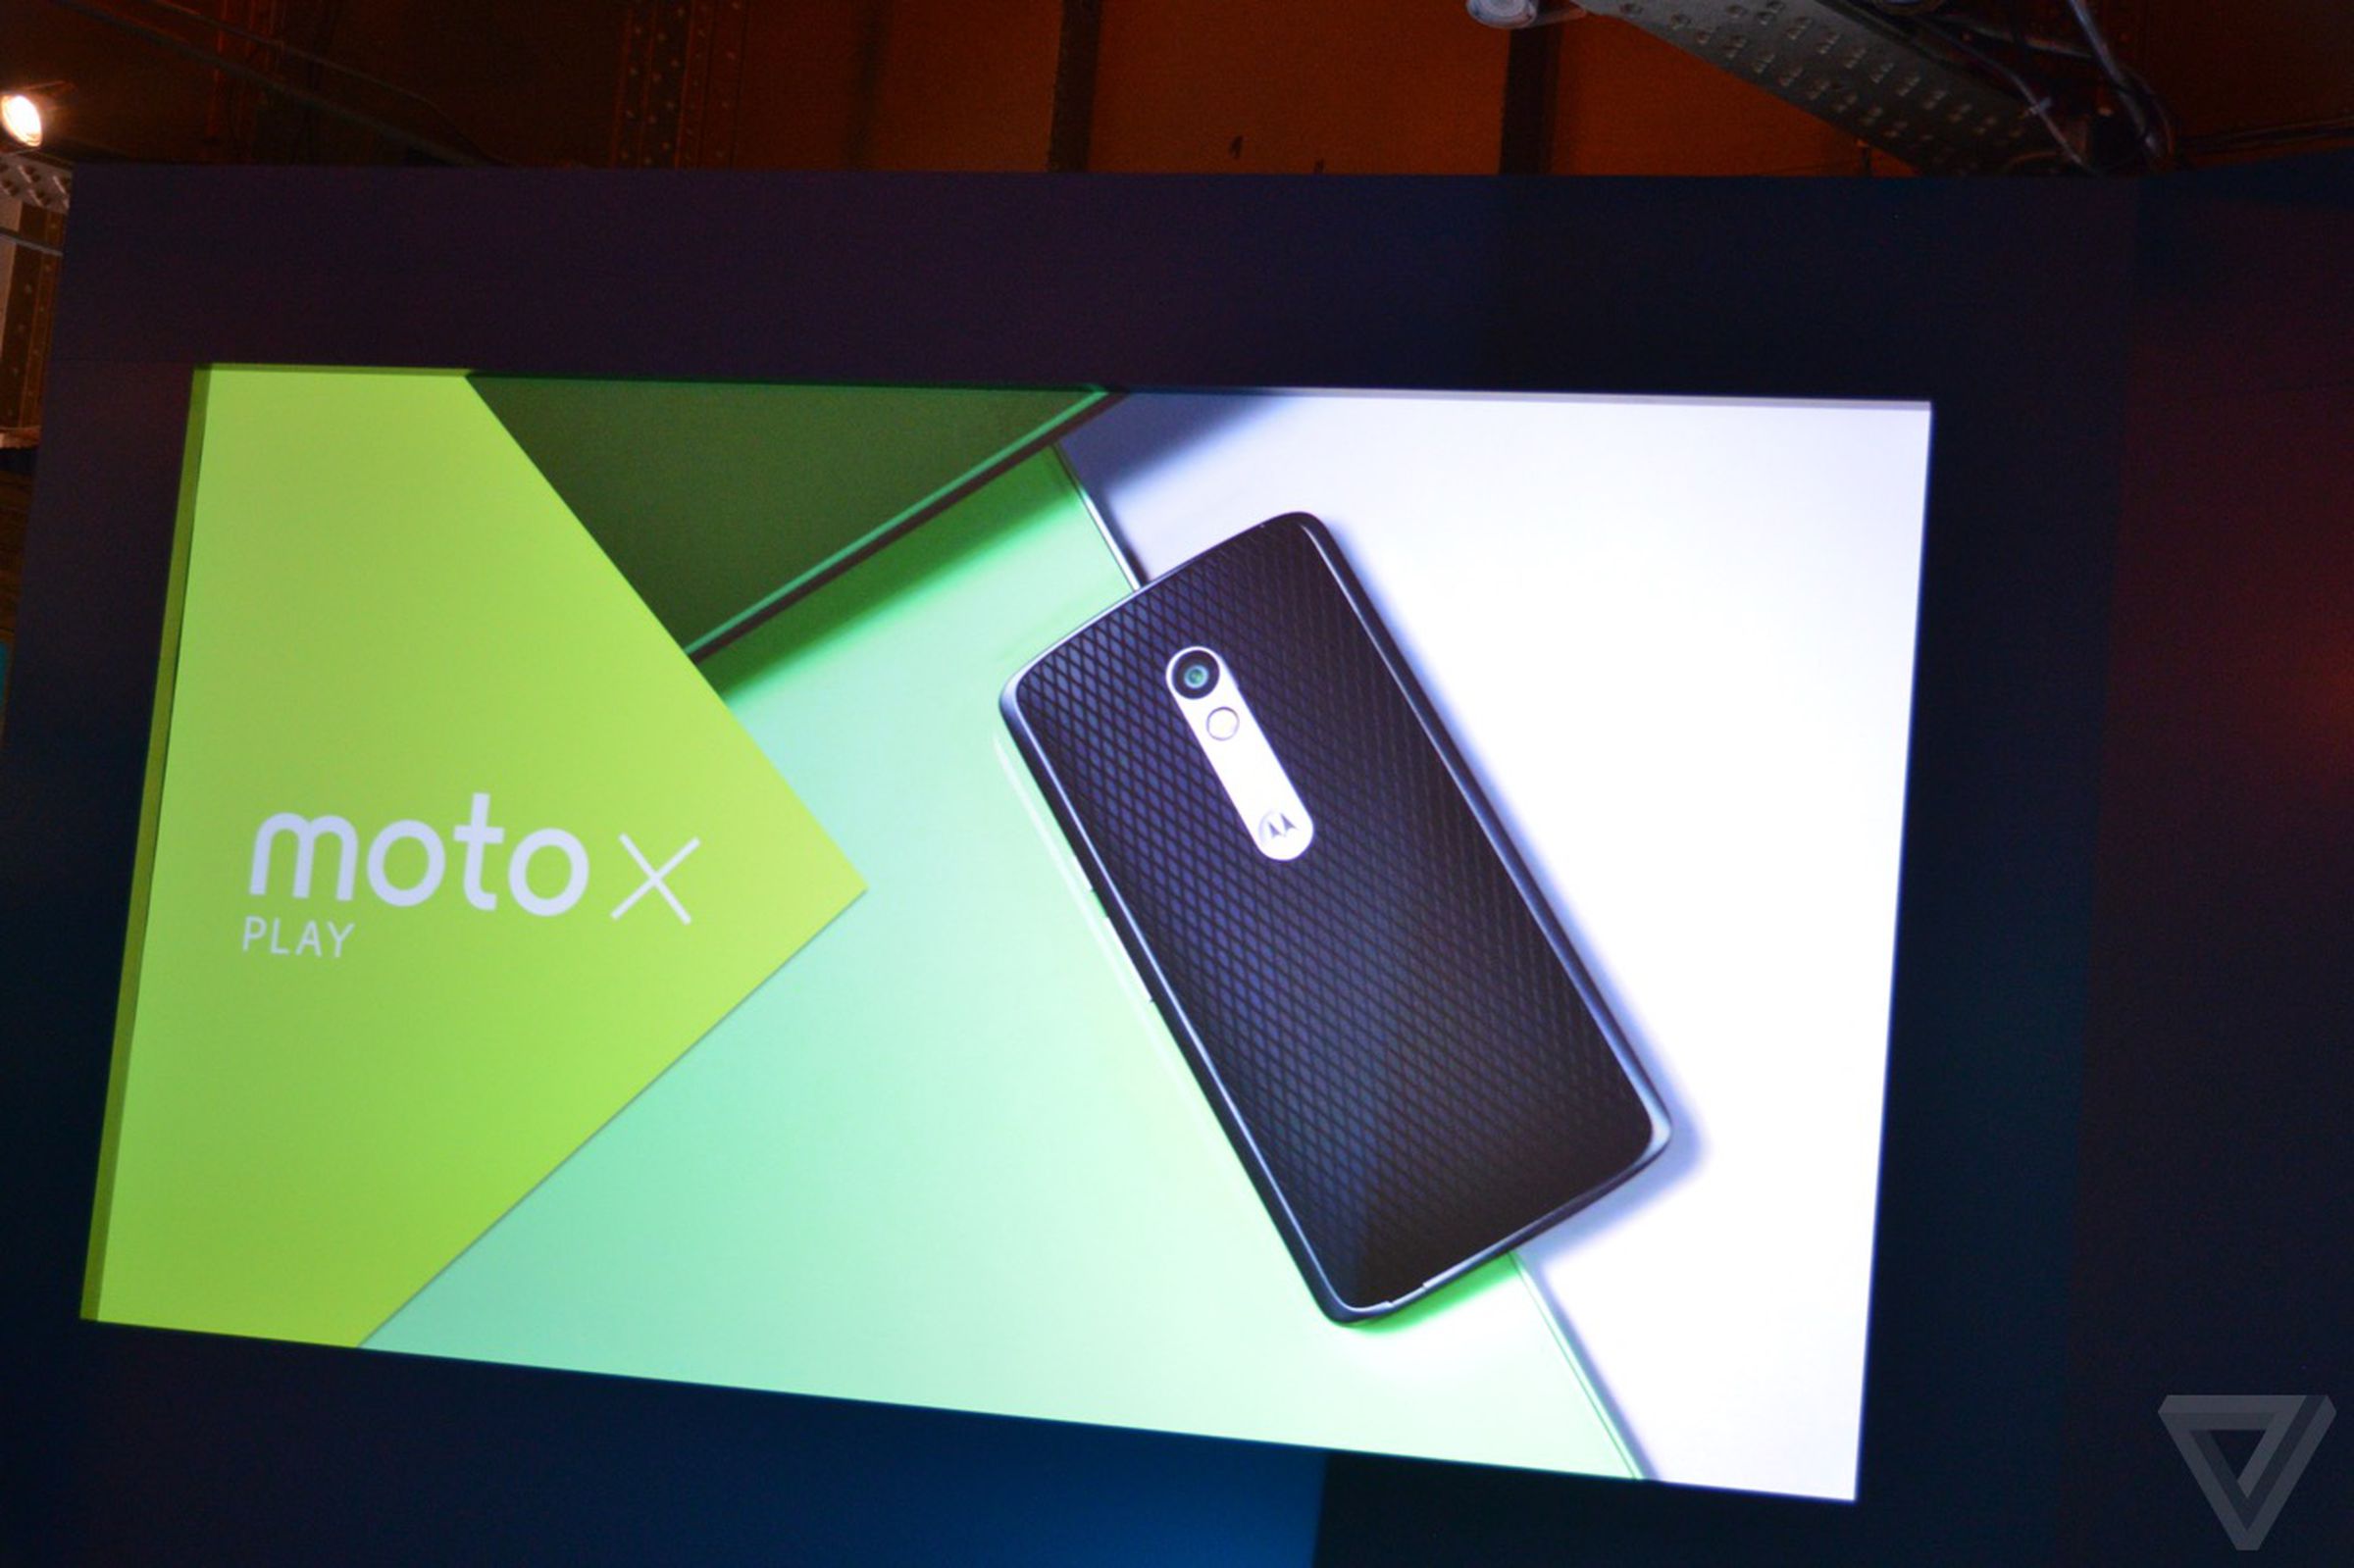 Moto X Play announcement photos